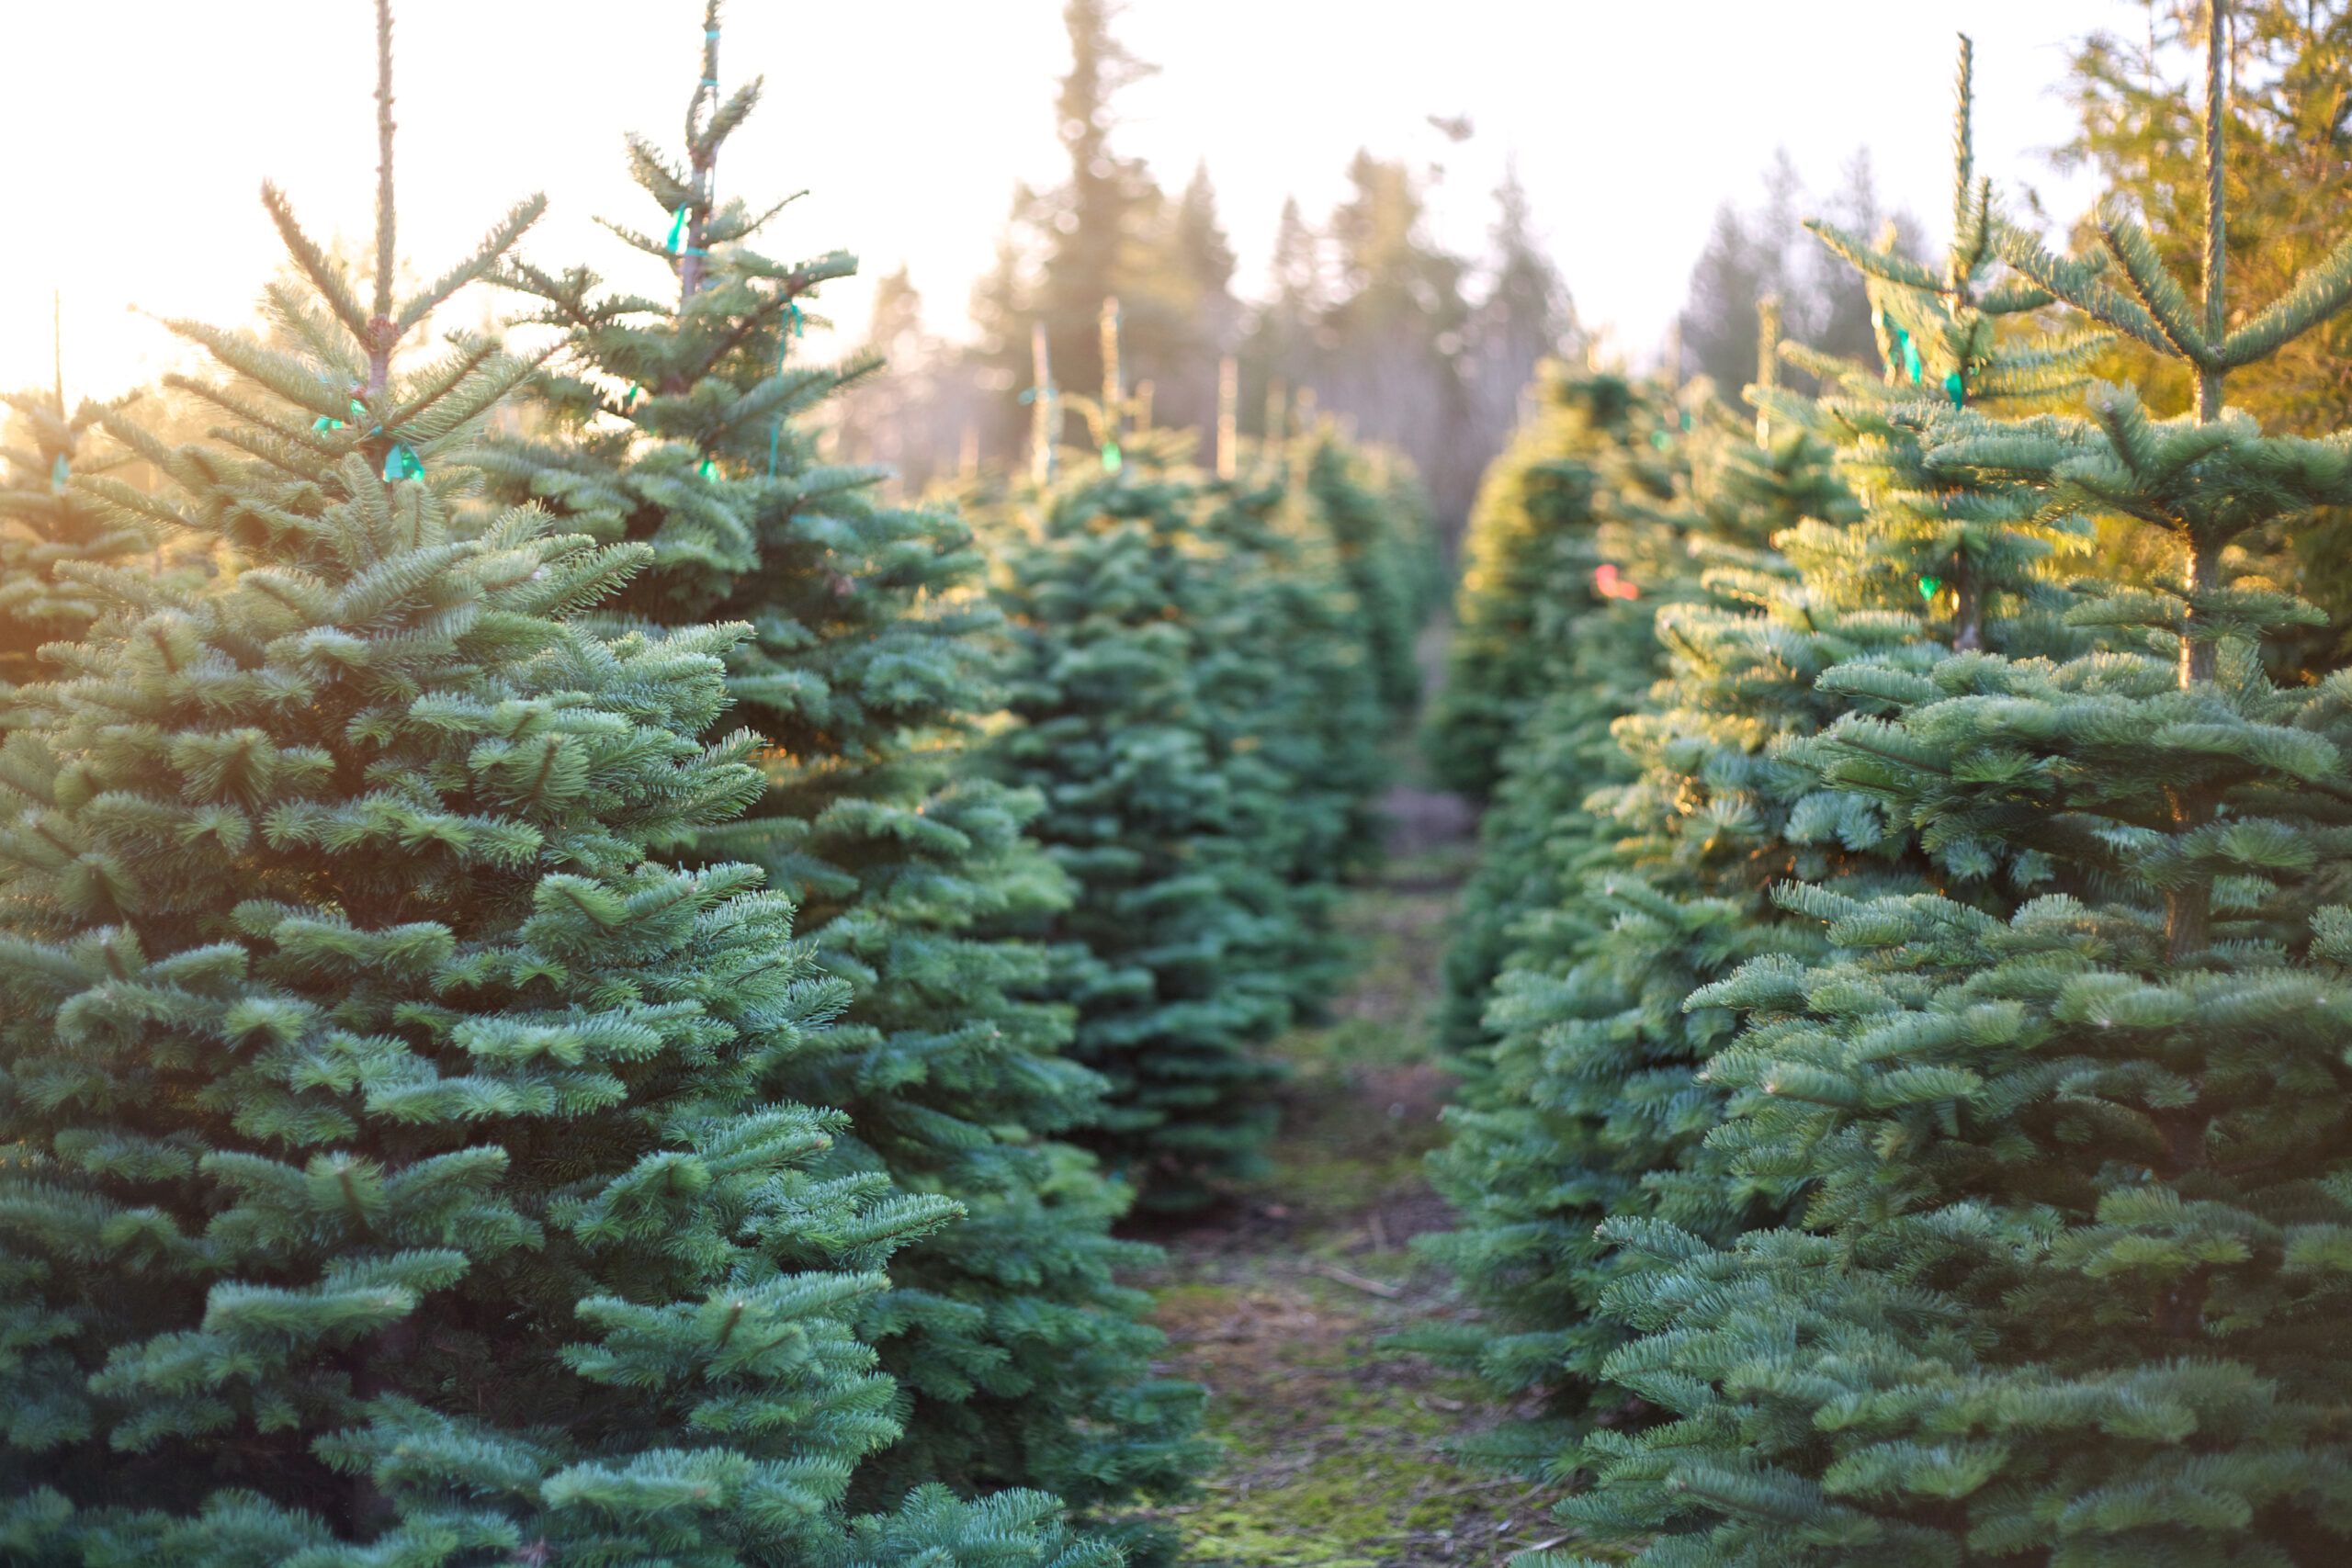 Where To Buy Live Christmas Trees?